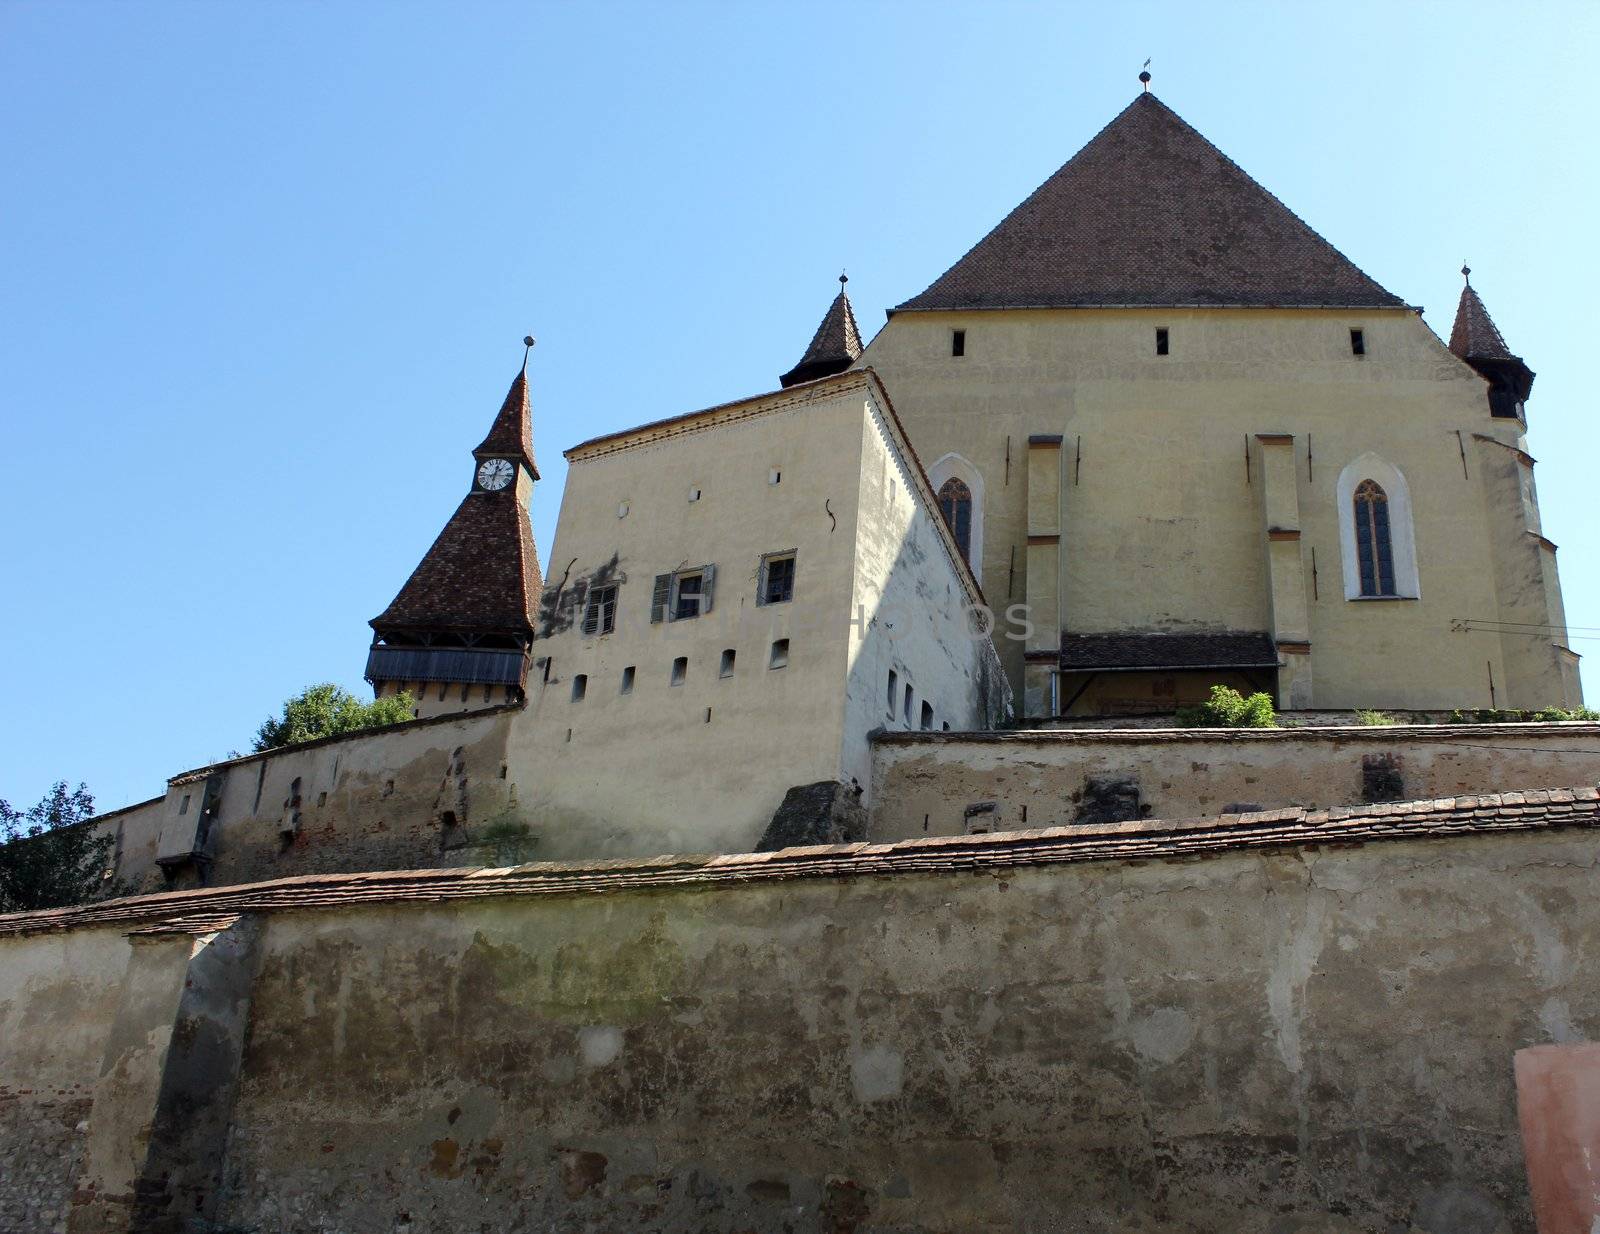 Fortified church of Biertan by Lirch